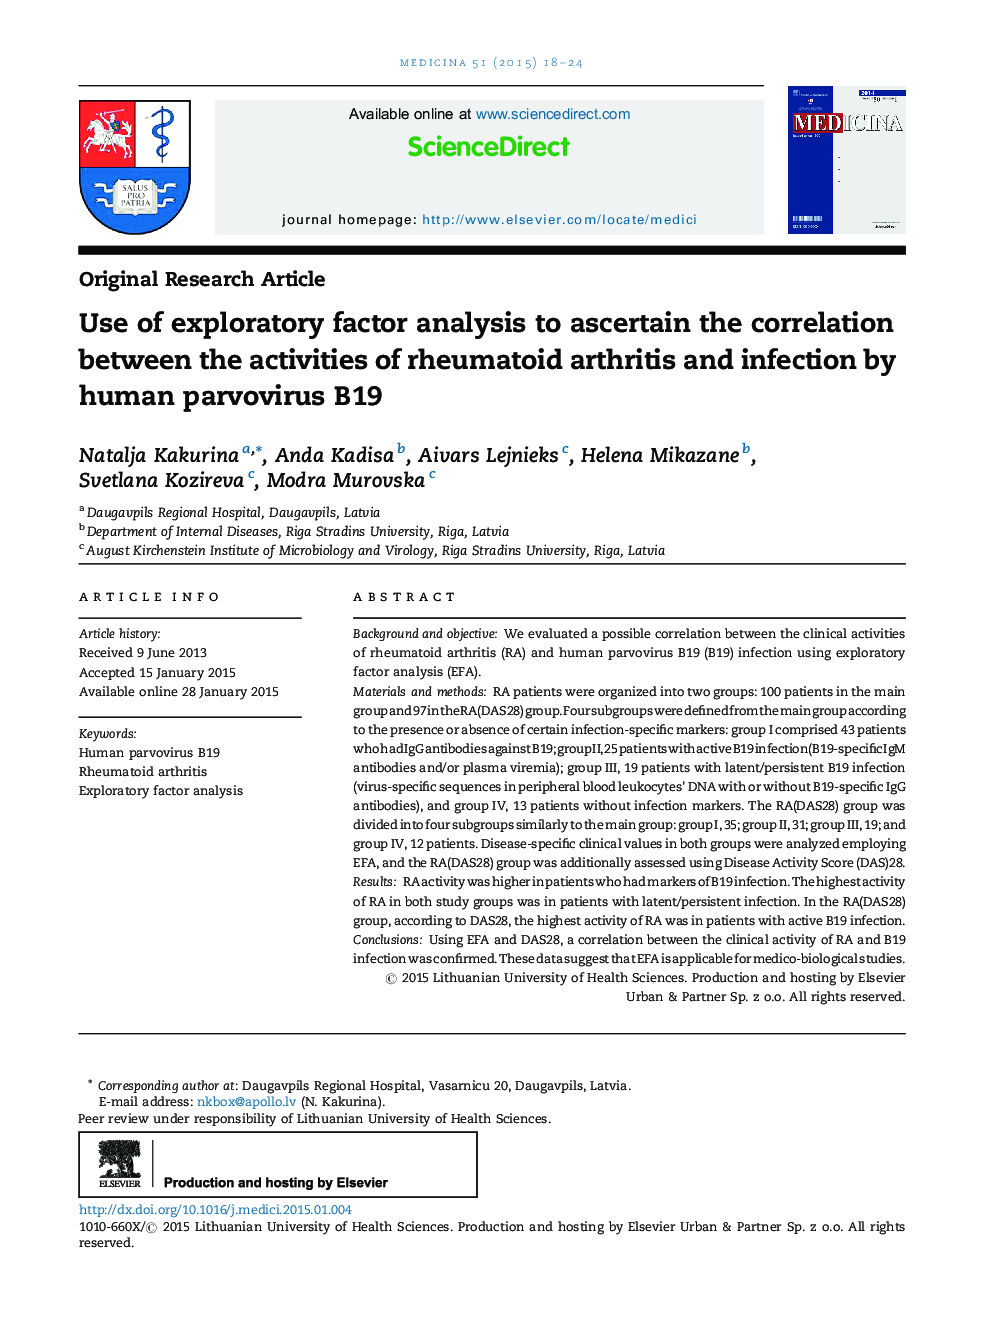 Use of exploratory factor analysis to ascertain the correlation between the activities of rheumatoid arthritis and infection by human parvovirus B19 